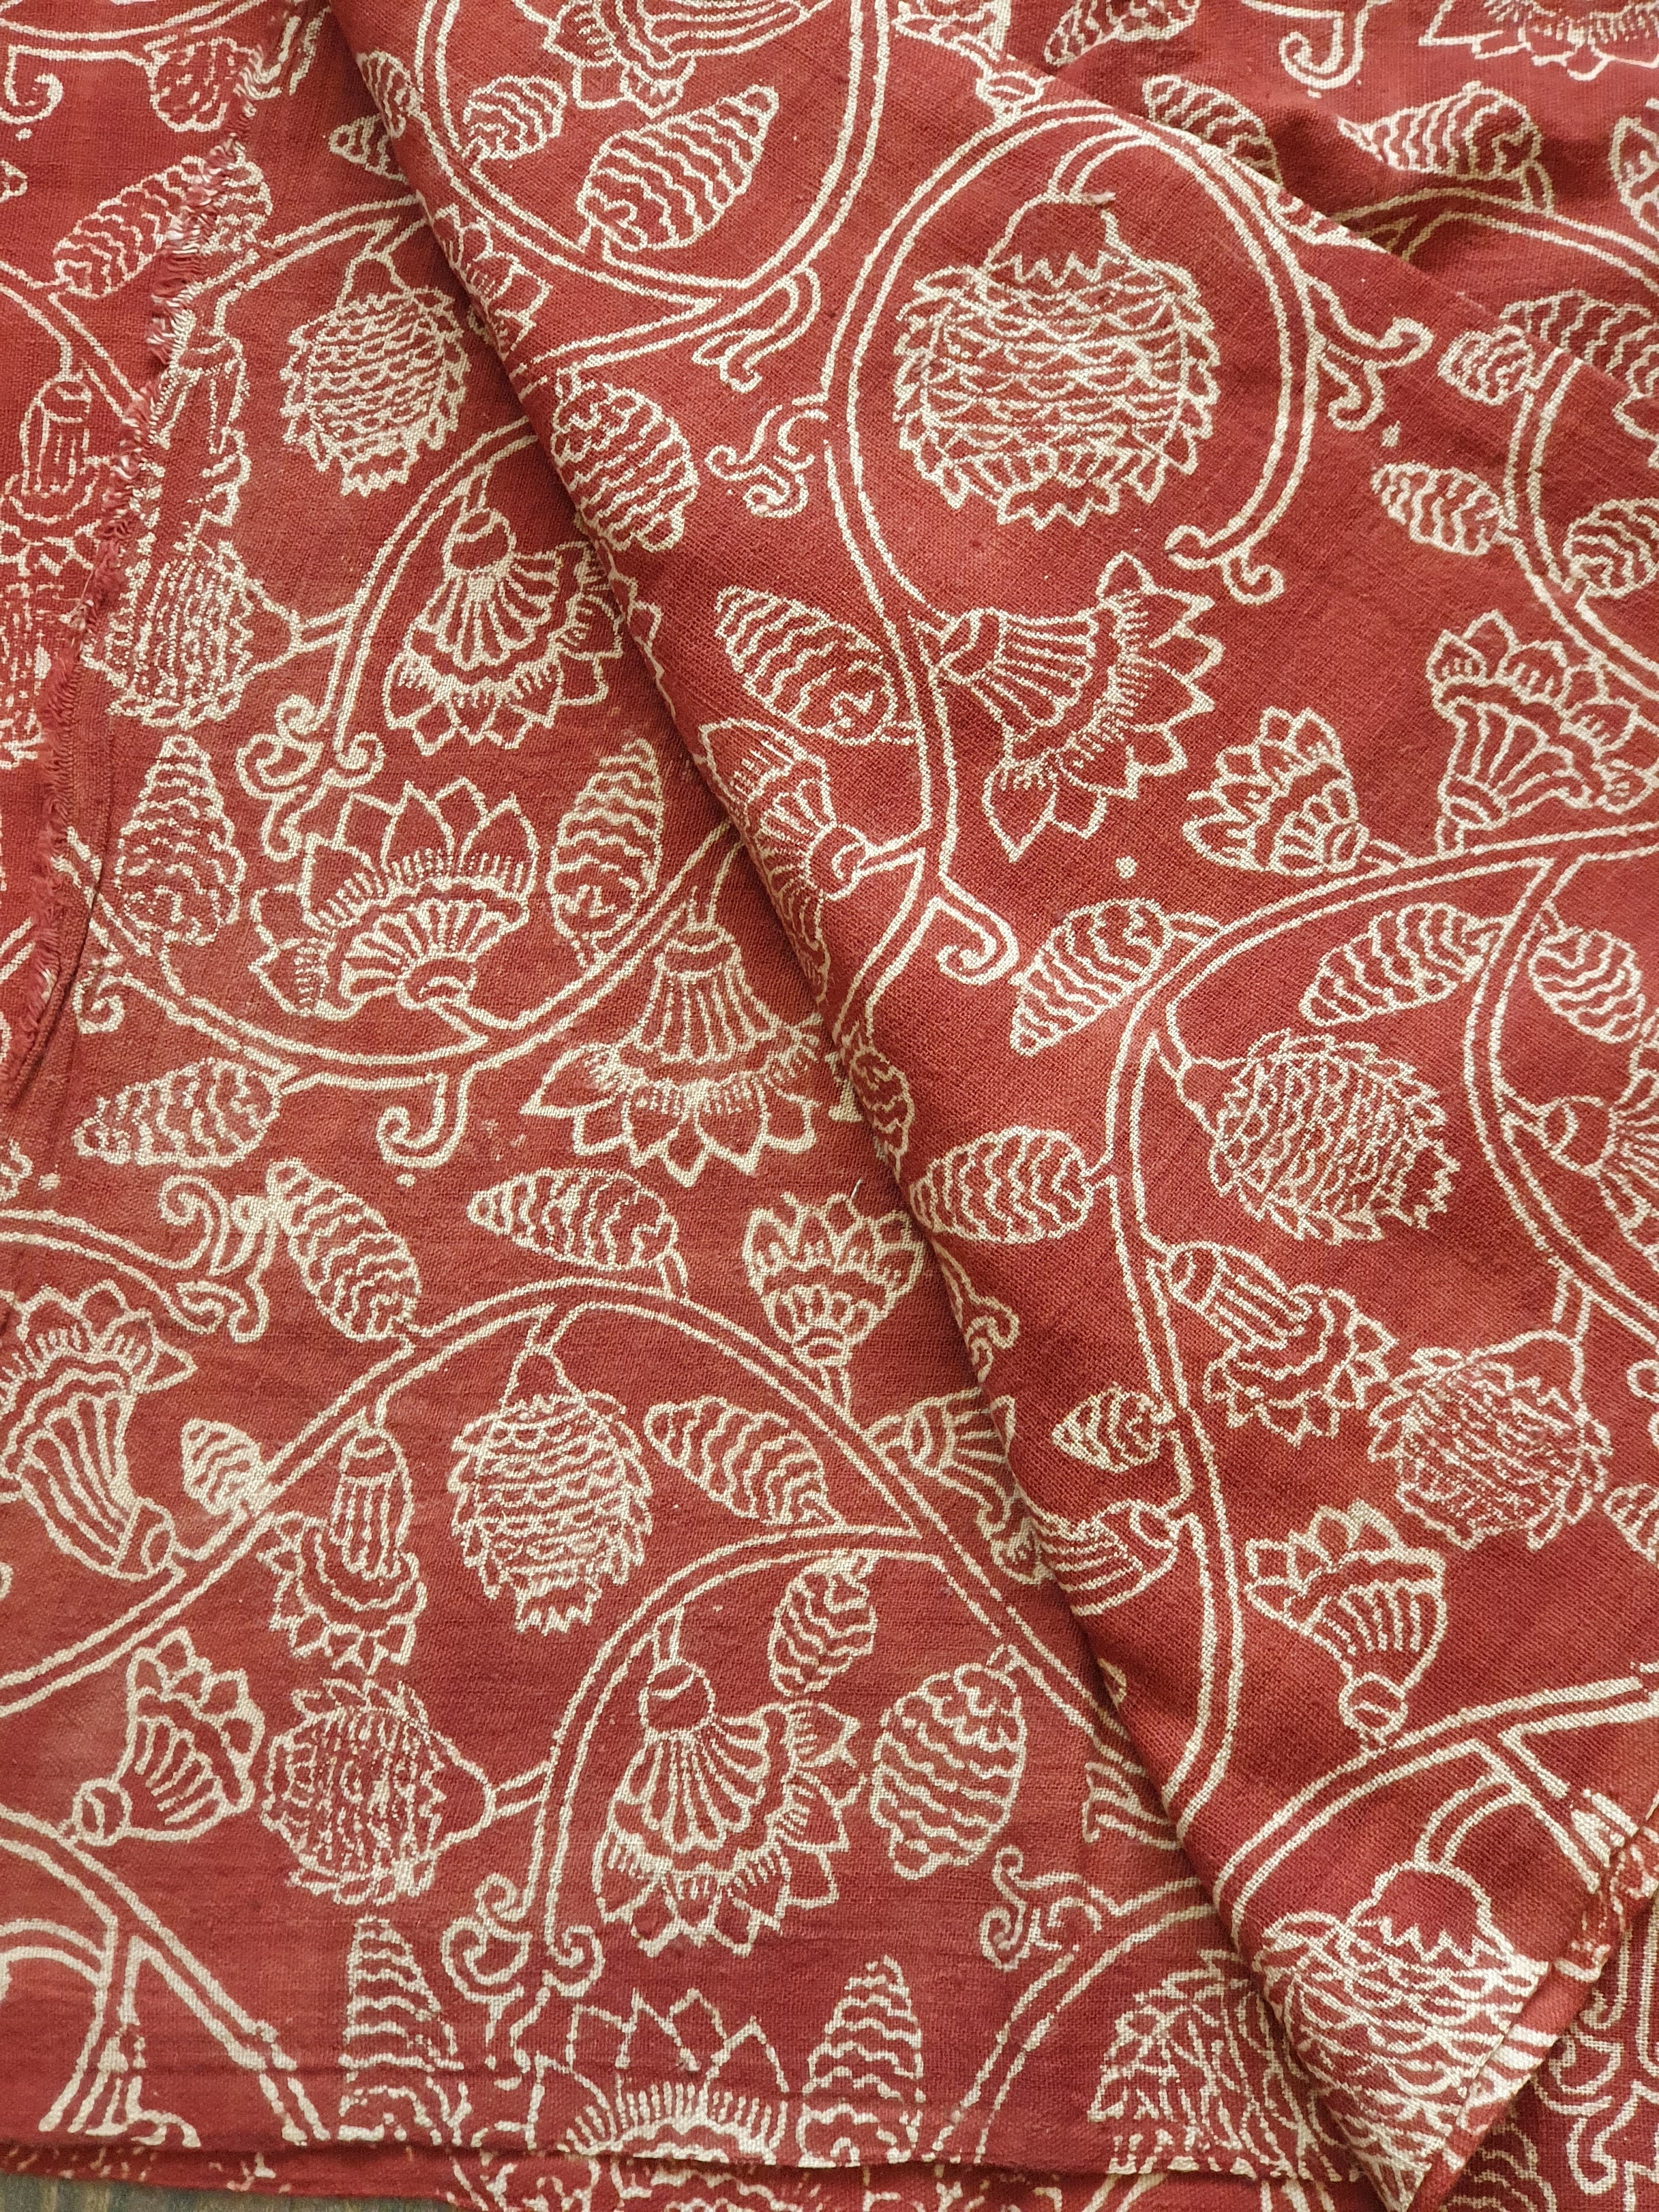 Kalamkari fabric in ecru on base of Alizarin red natural dye | Etsy